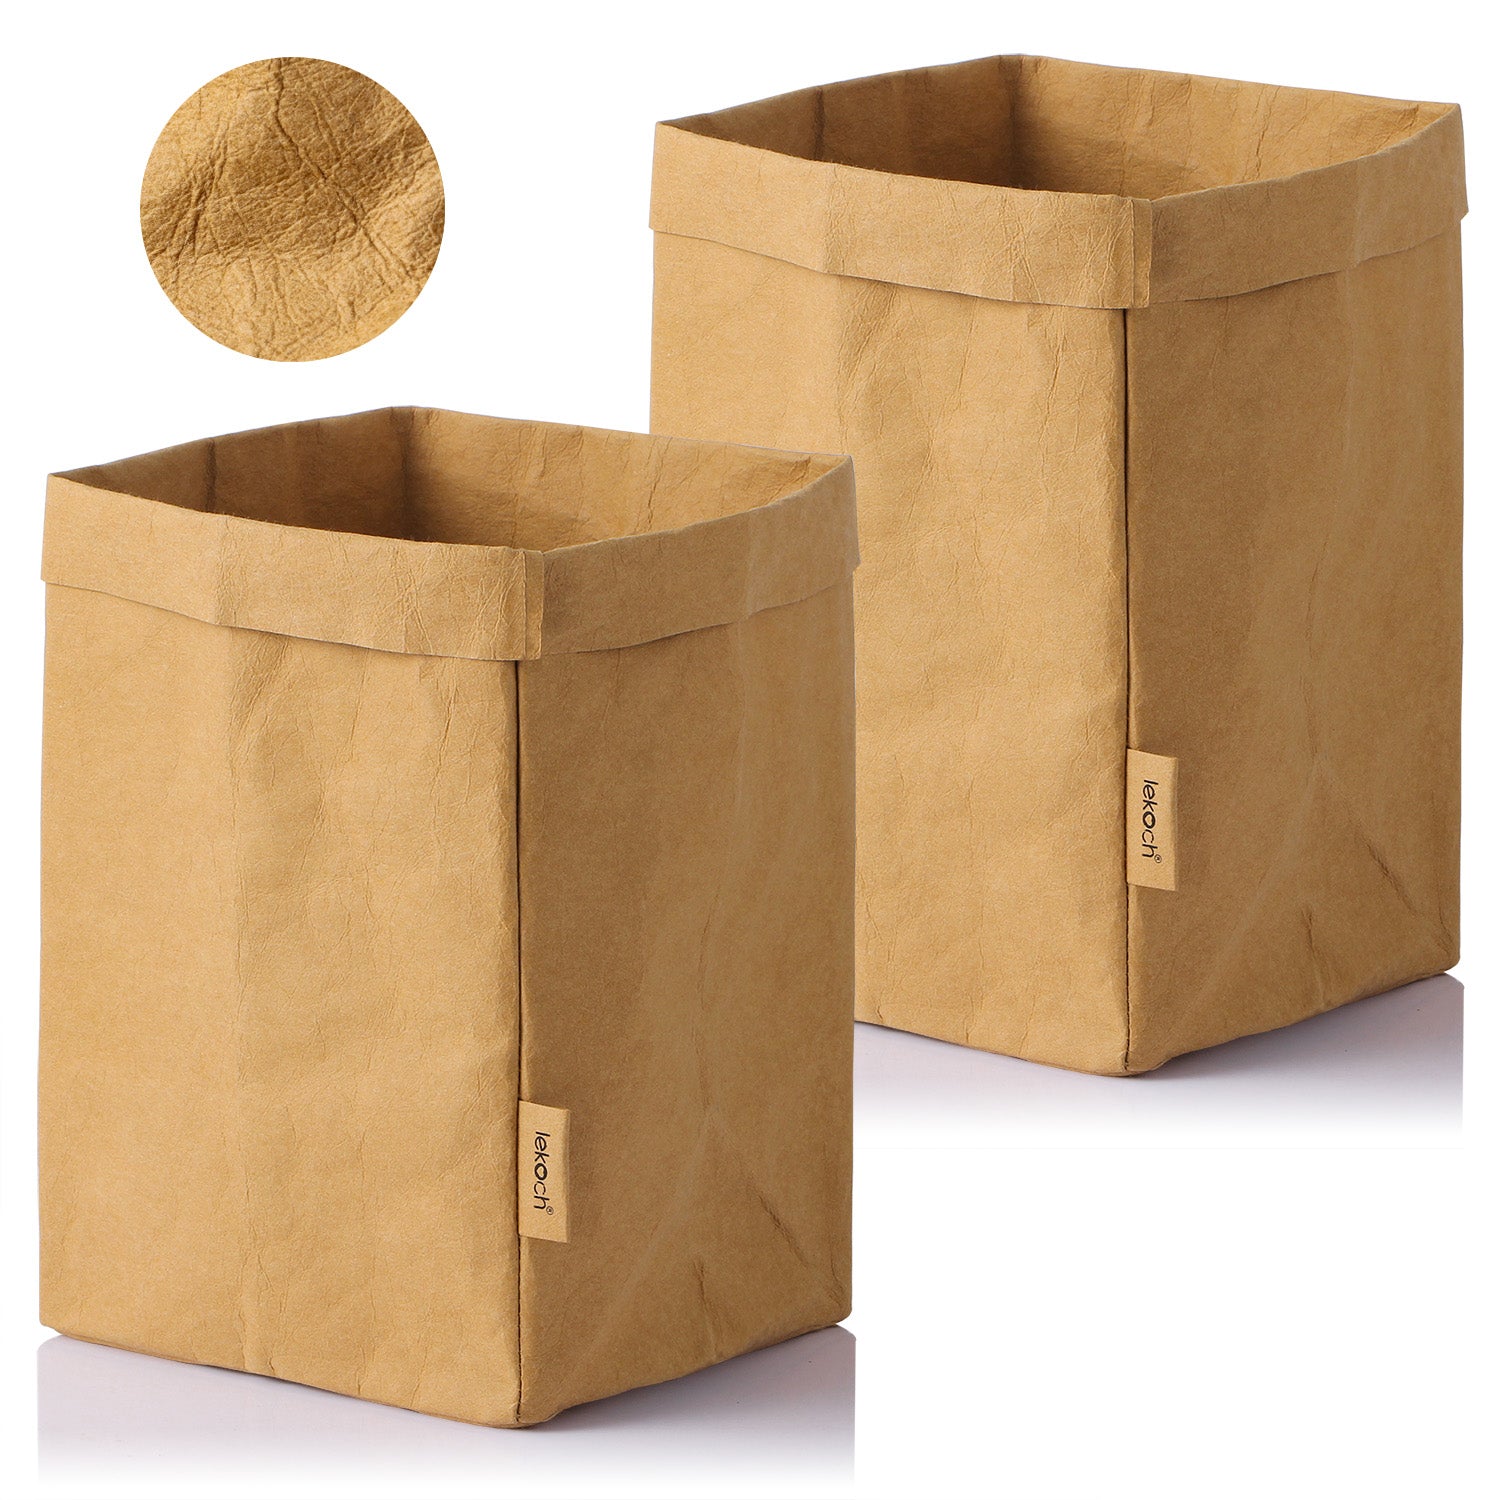 2PCS Washable Kraft Paper Bags Grey Eco-friendly Reusable Paper Bags  Storage Bag for Fruits Bread Vegetables Plants